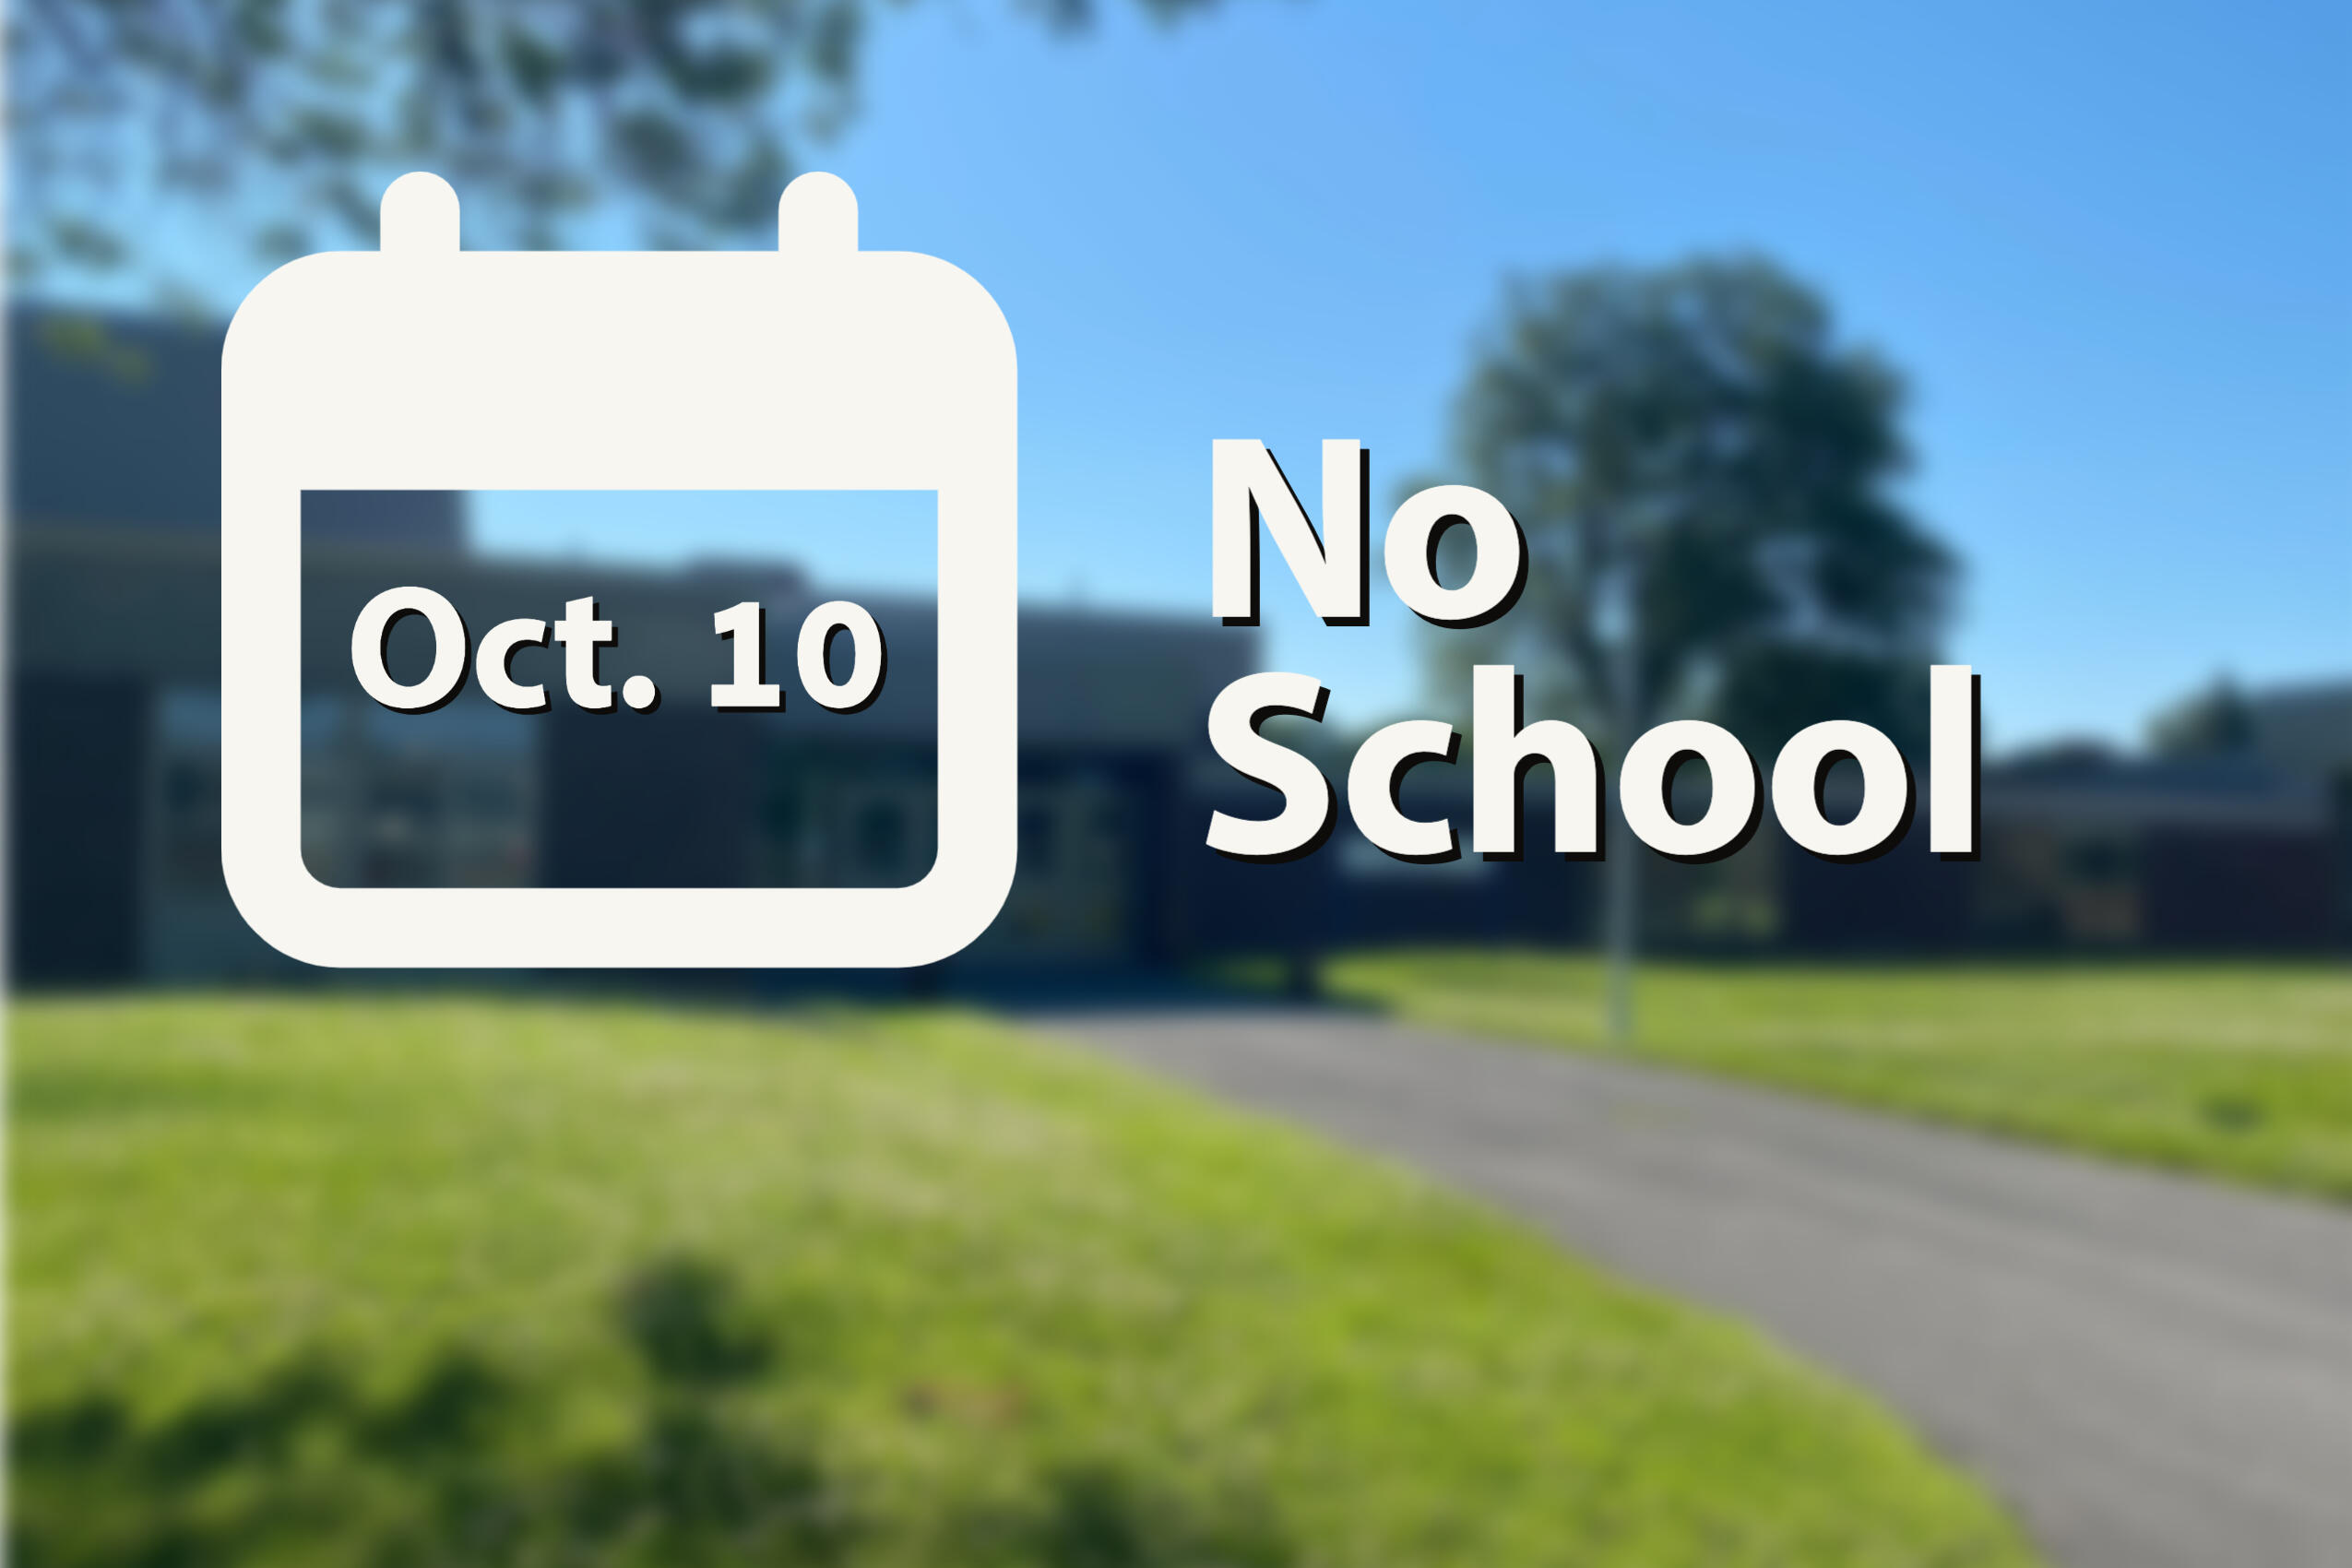 Columbus Day, Monday Oct 12, No School